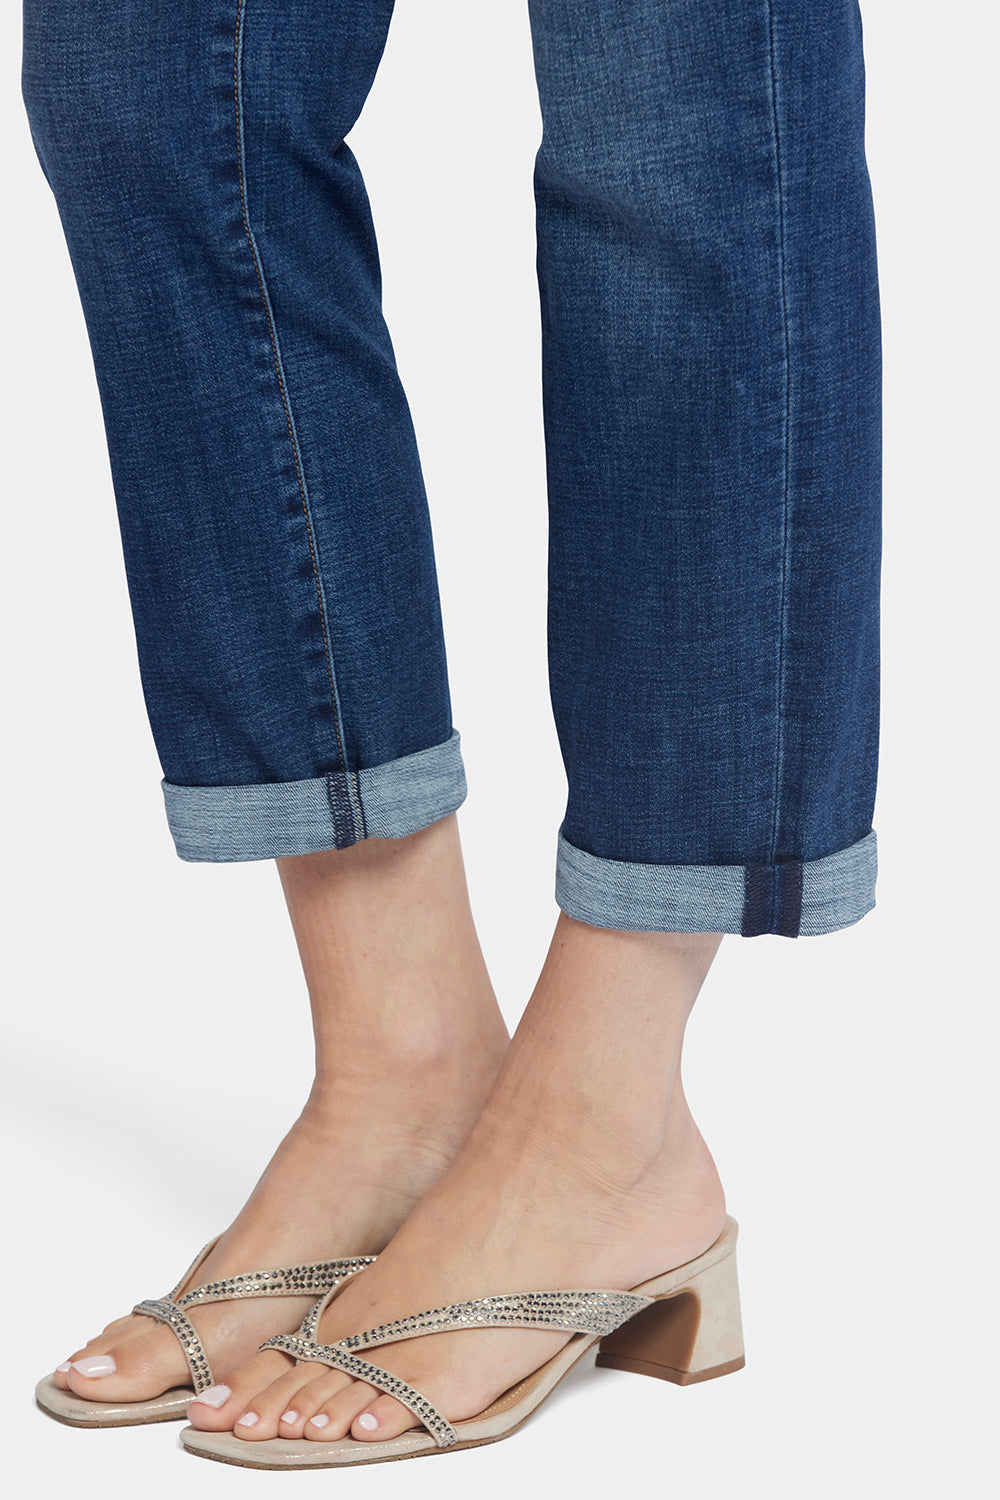 NYDJ Margot Girlfriend Jeans With Roll Cuffs - Olympus